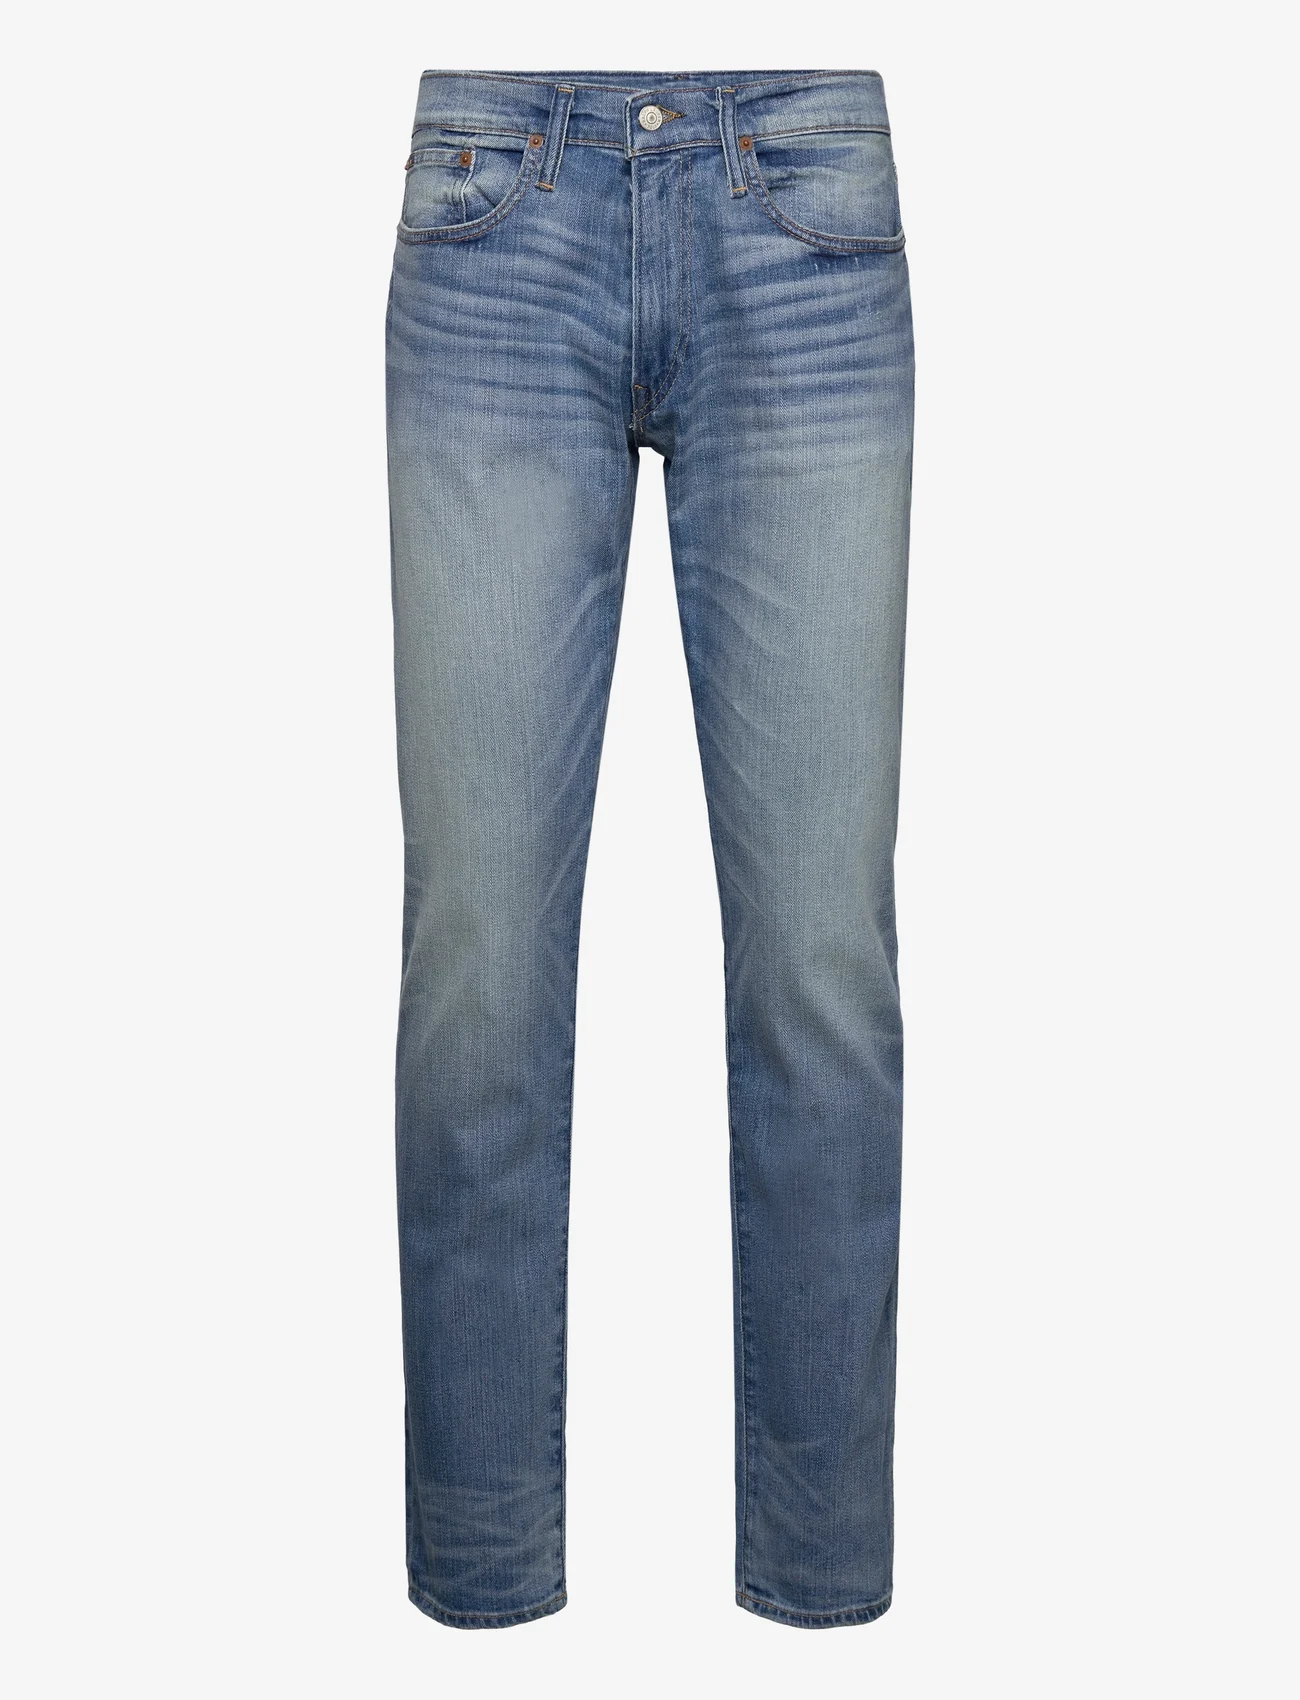 Polo Ralph Lauren - Parkside Active Taper Stretch Jean - regular jeans - gilded - 0